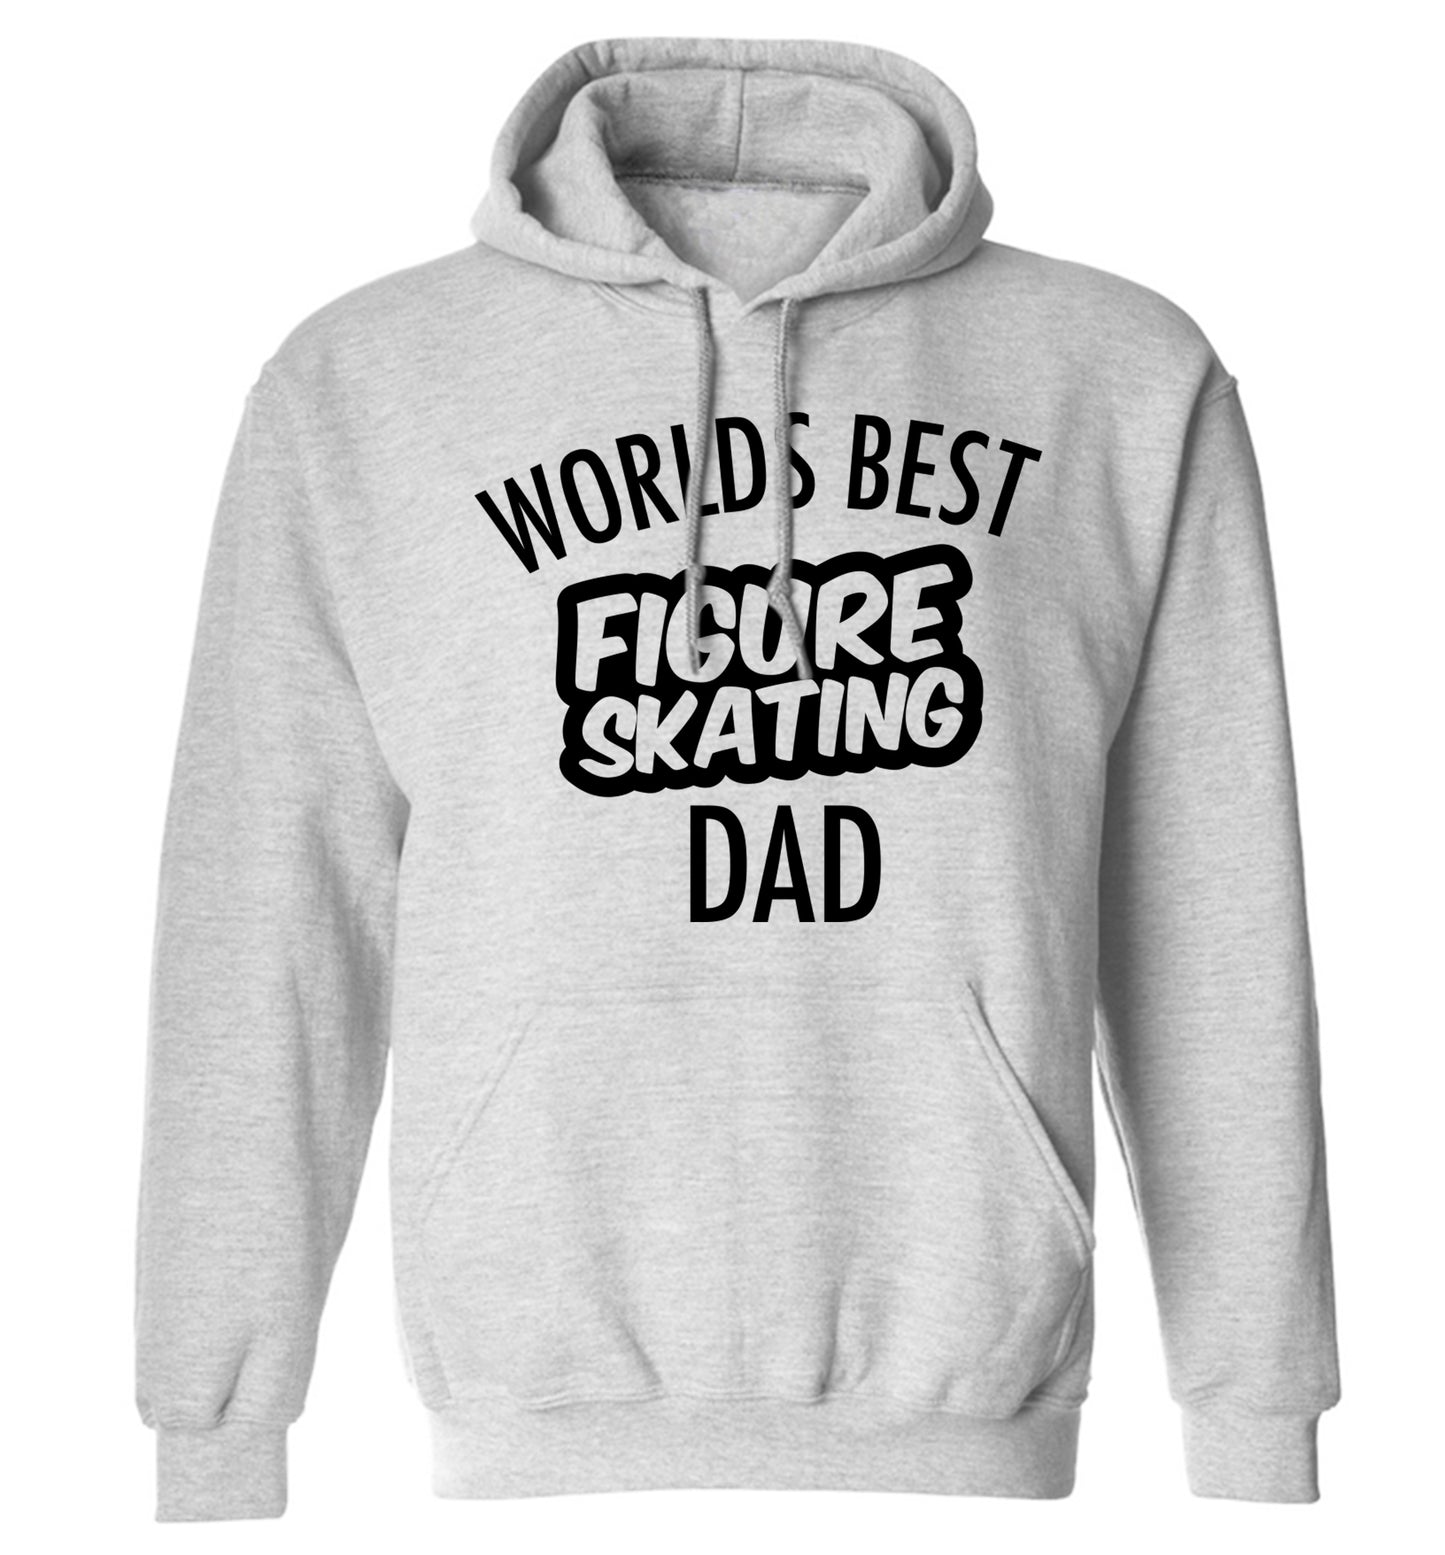 Worlds best figure skating dad adults unisexgrey hoodie 2XL